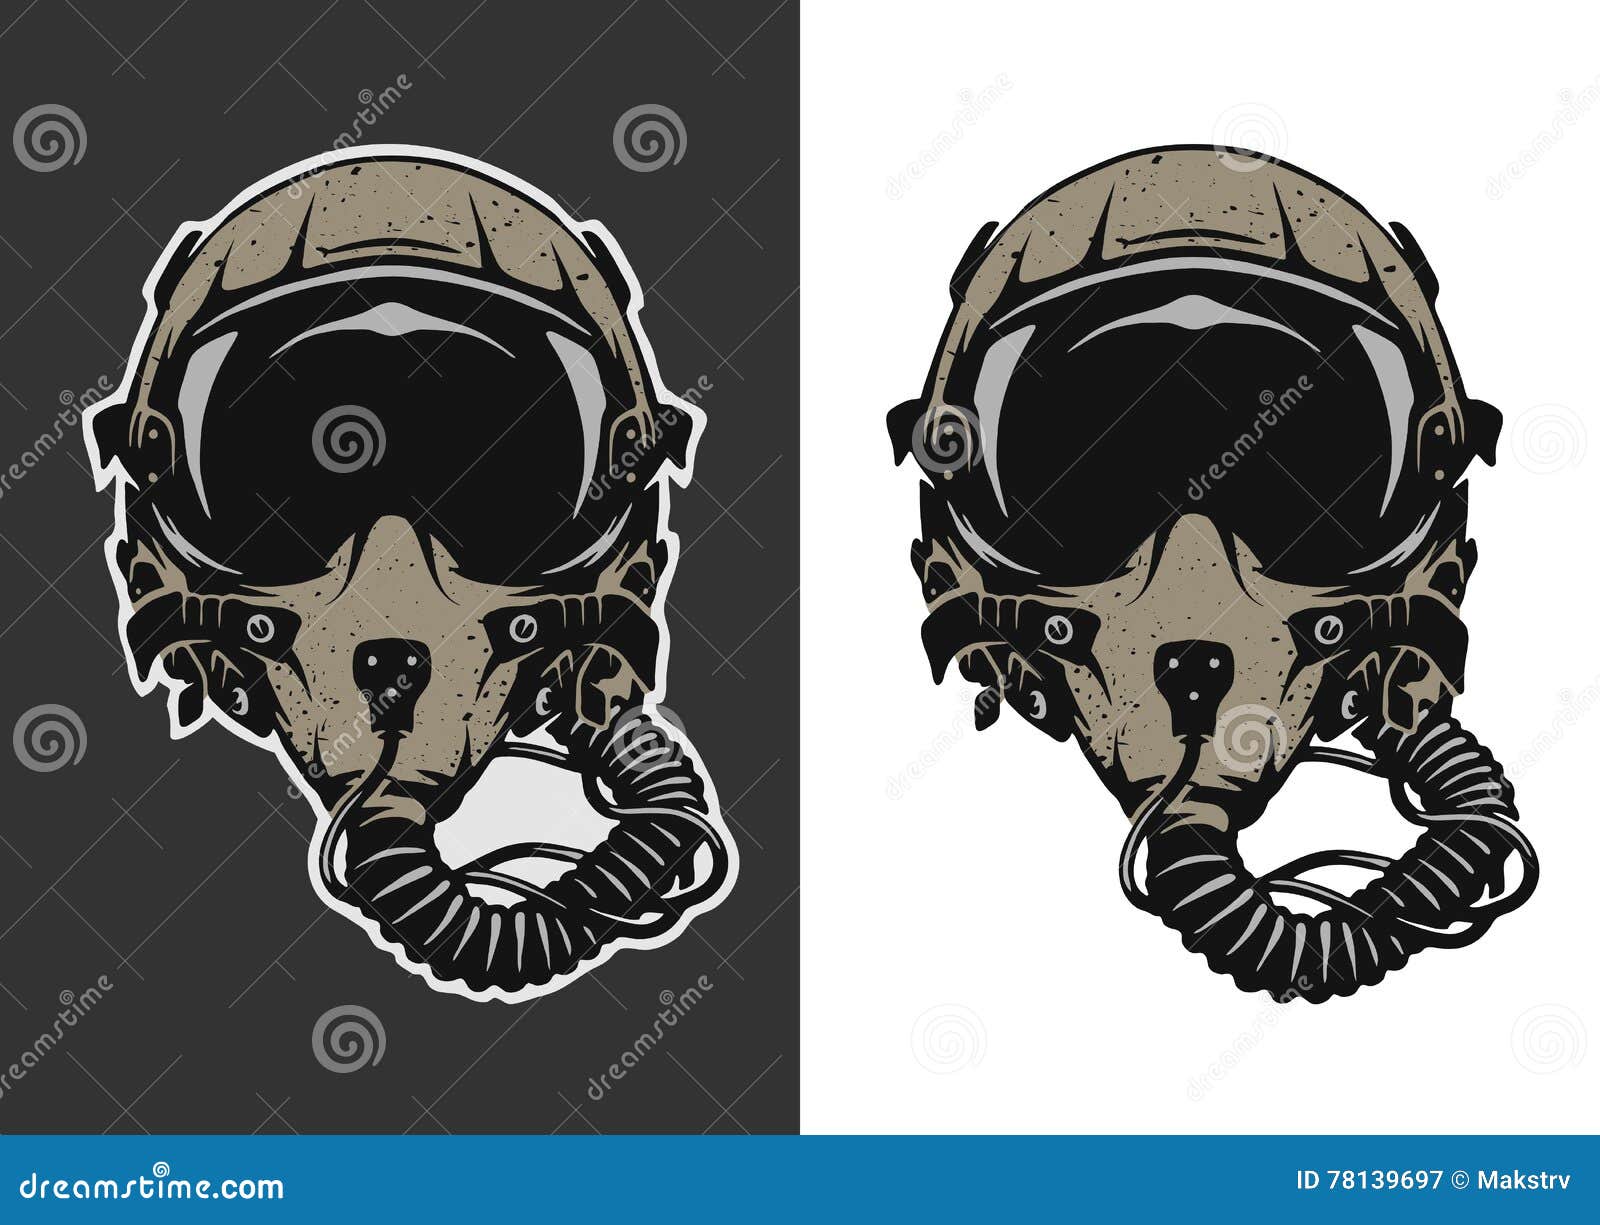 fighter pilot helmet.